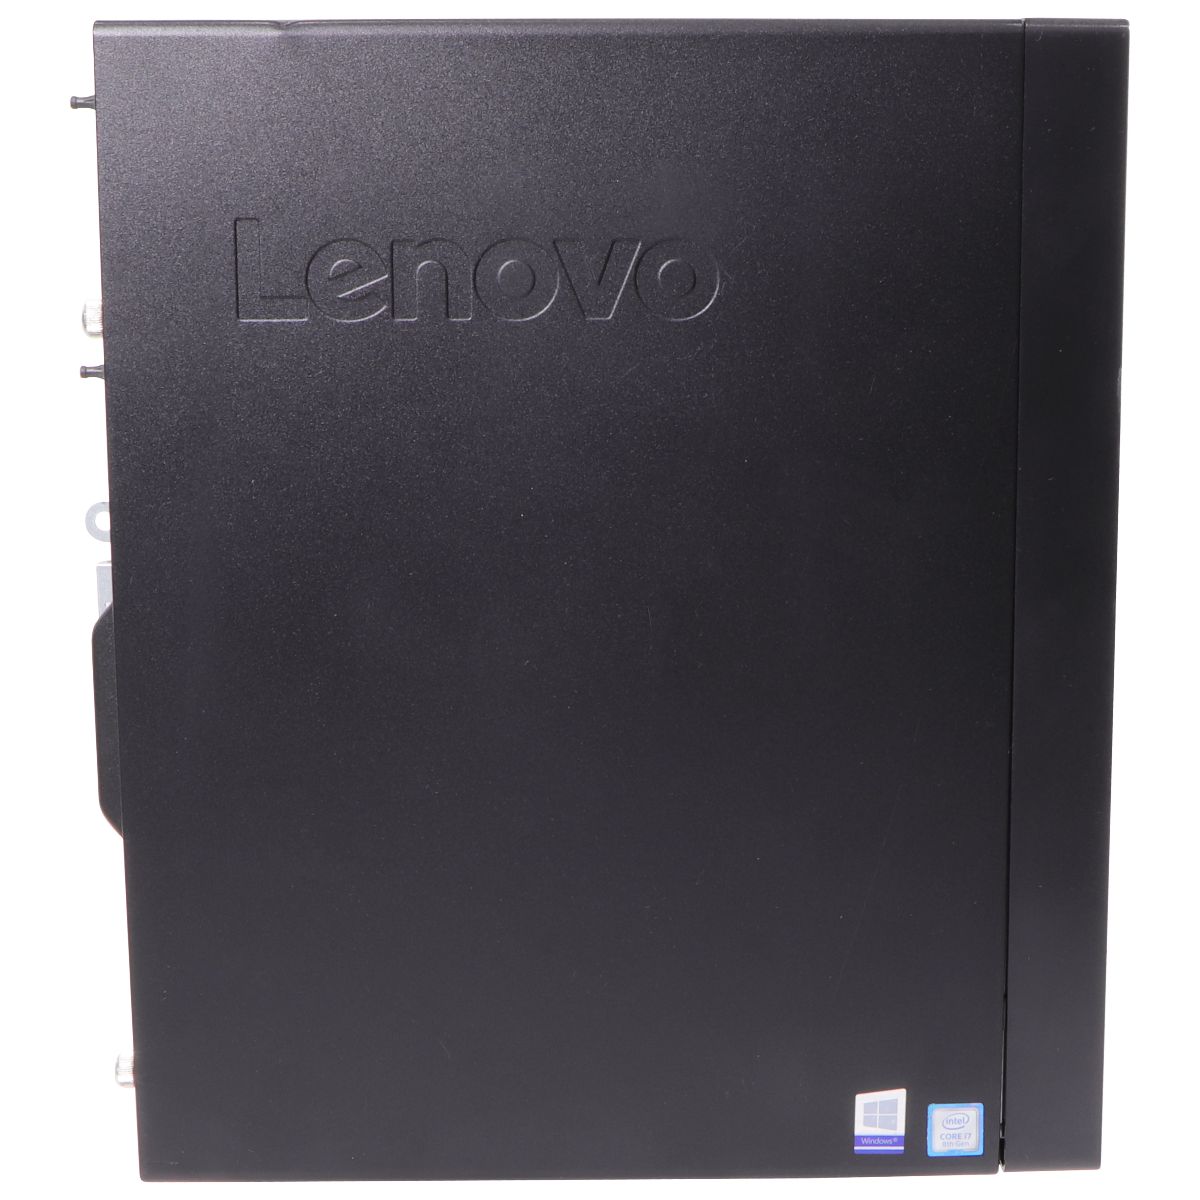 Lenovo ThinkStation P330 Tower PC (30C5001DUS) i7-8700K/512GB SSD/16GB/10 Home PC Desktops & All-In-Ones Lenovo    - Simple Cell Bulk Wholesale Pricing - USA Seller